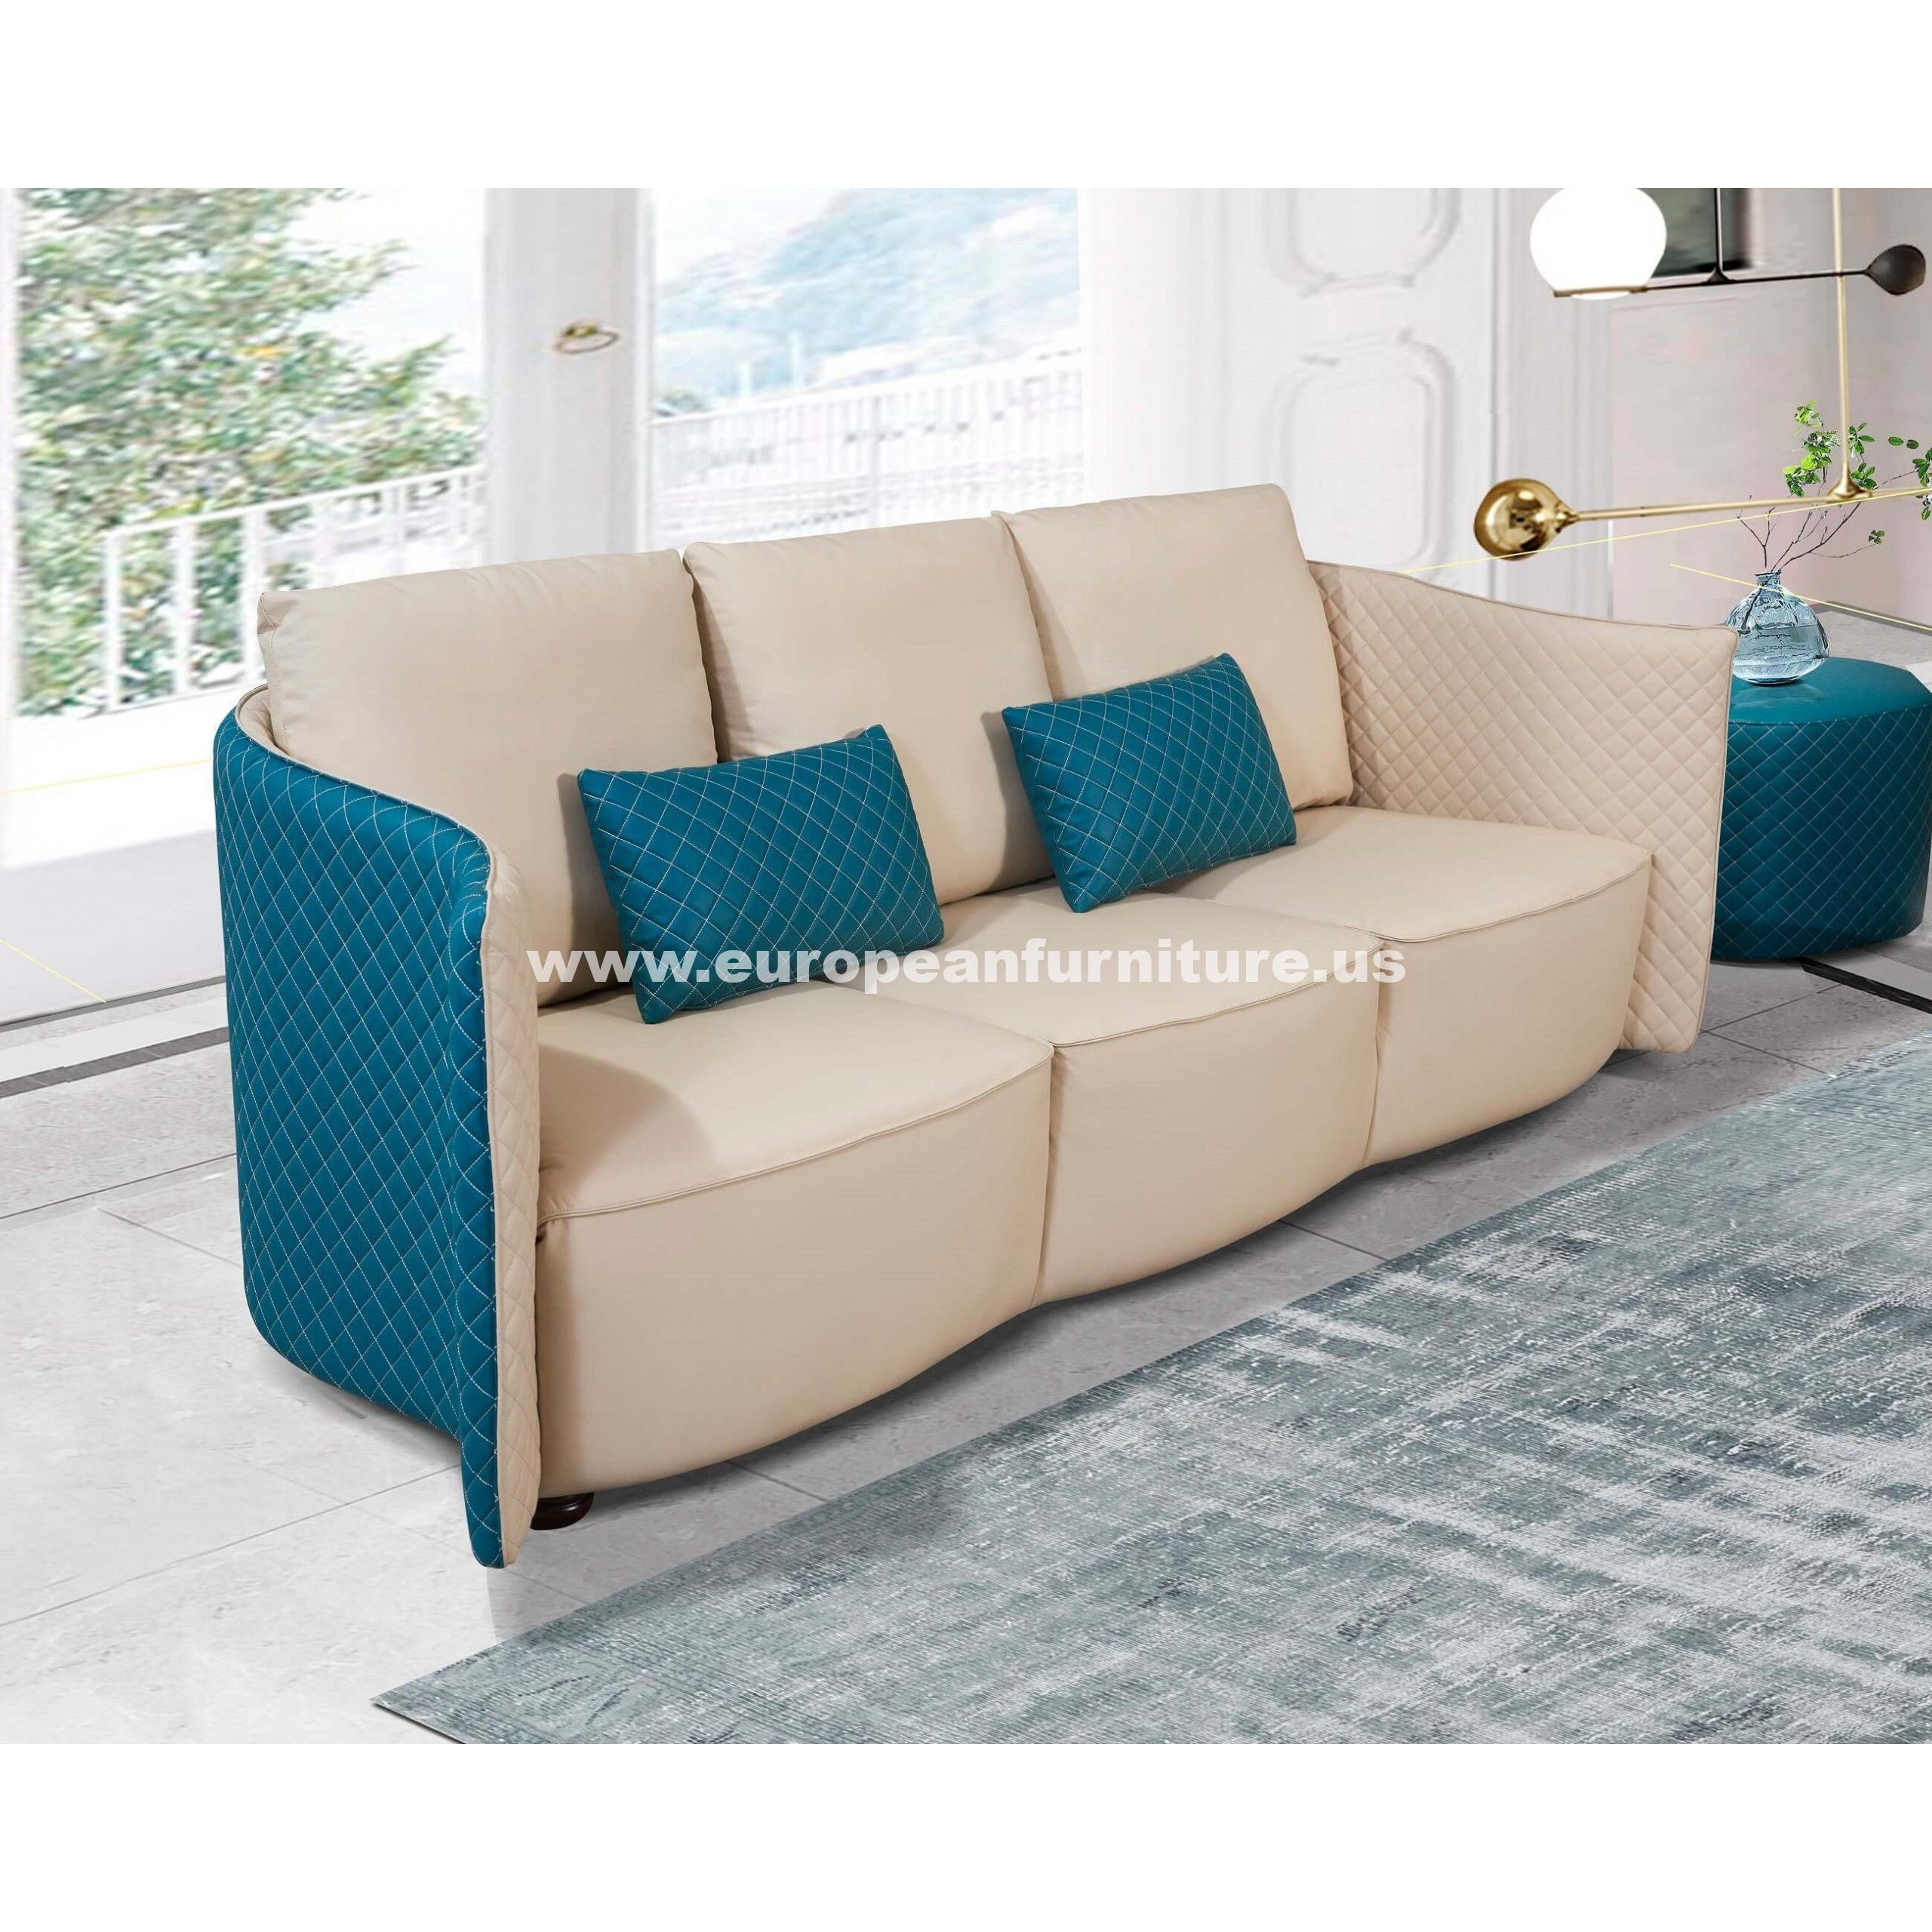 European Furniture - Makassar Sofa Beige & Blue Italian Leather - EF-52554-S - New Star Living